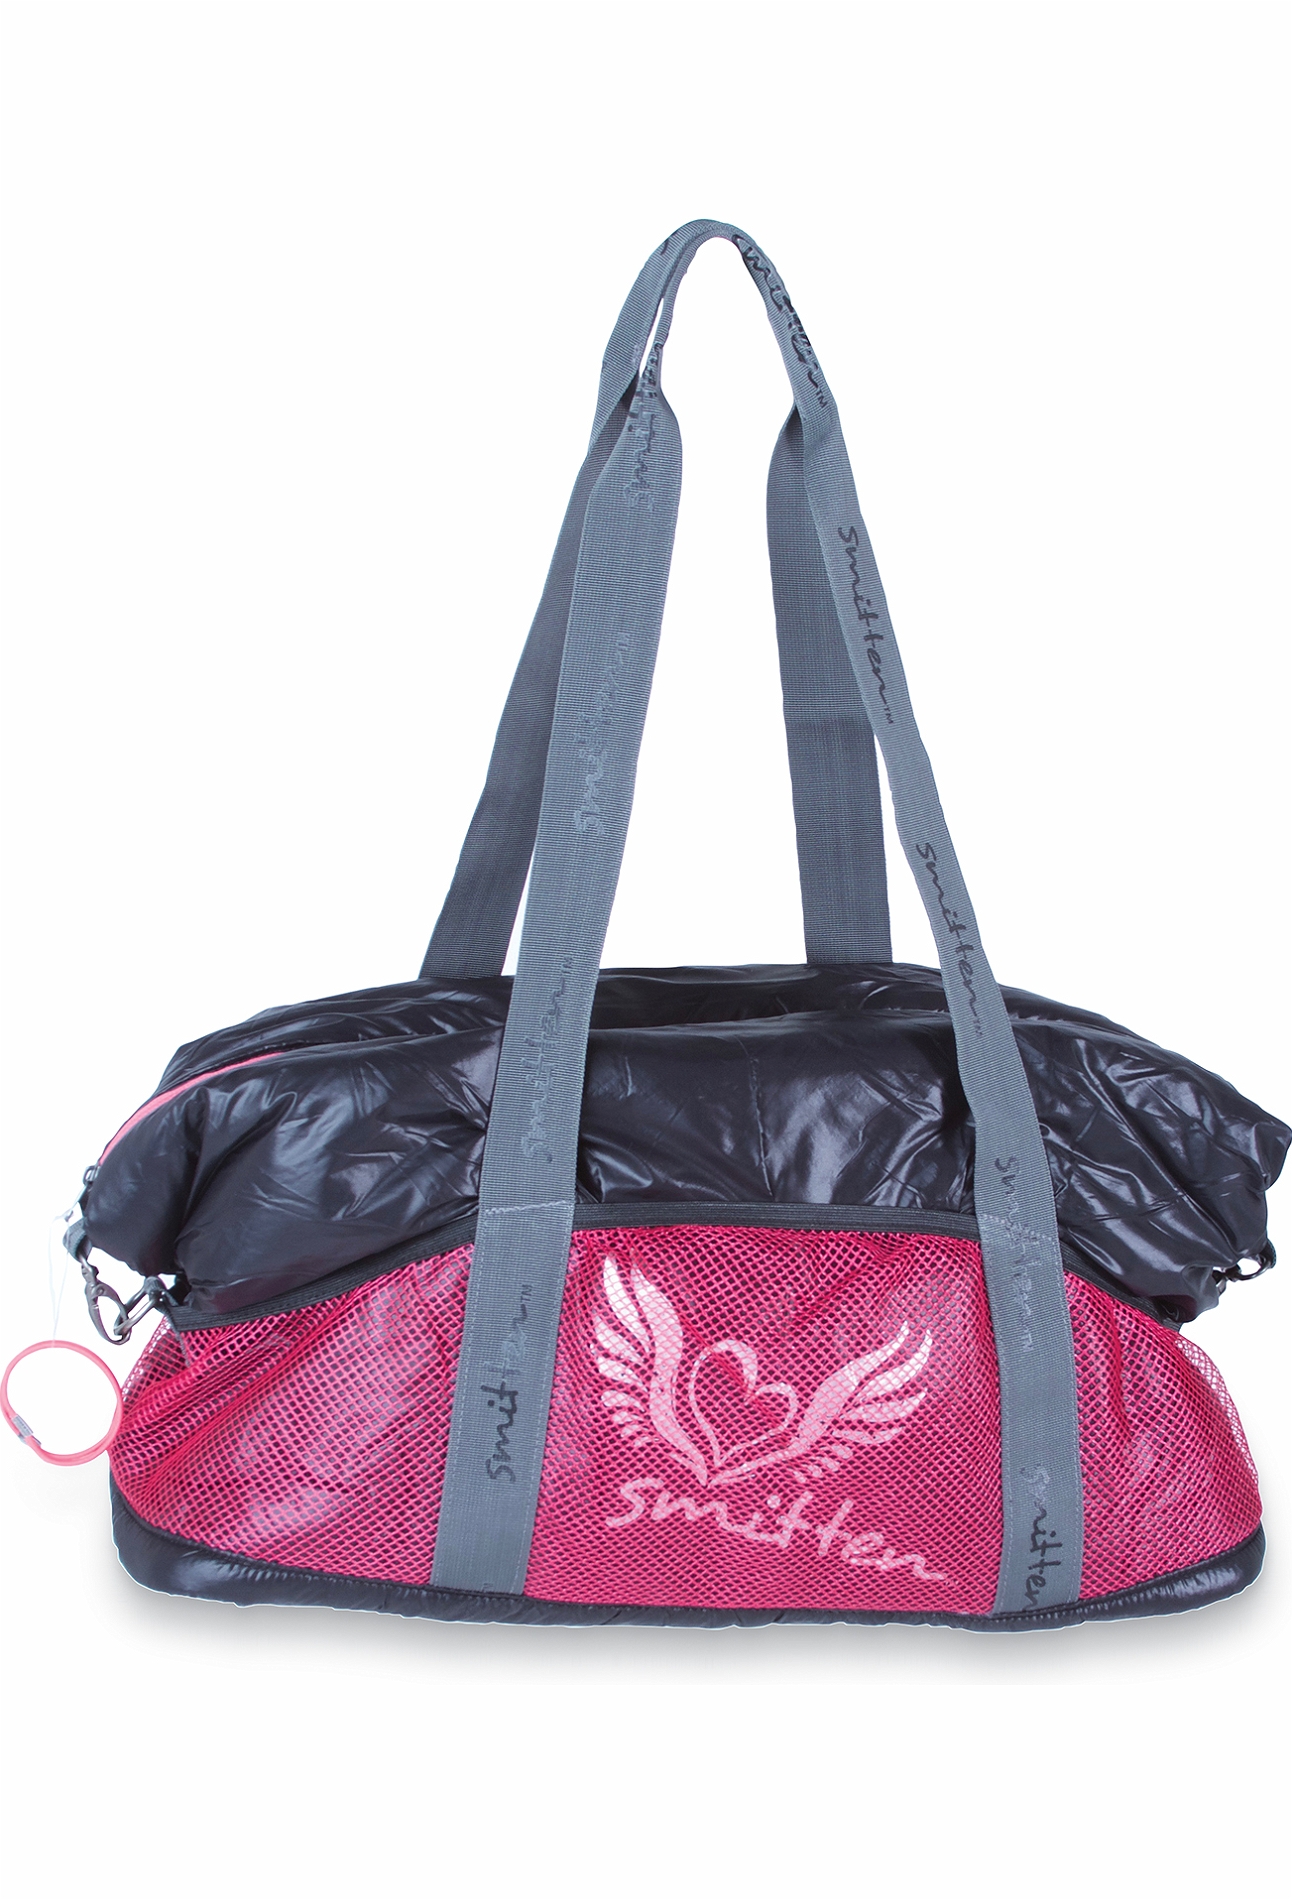 Smitten Women's Duffle Bag-PIXIE